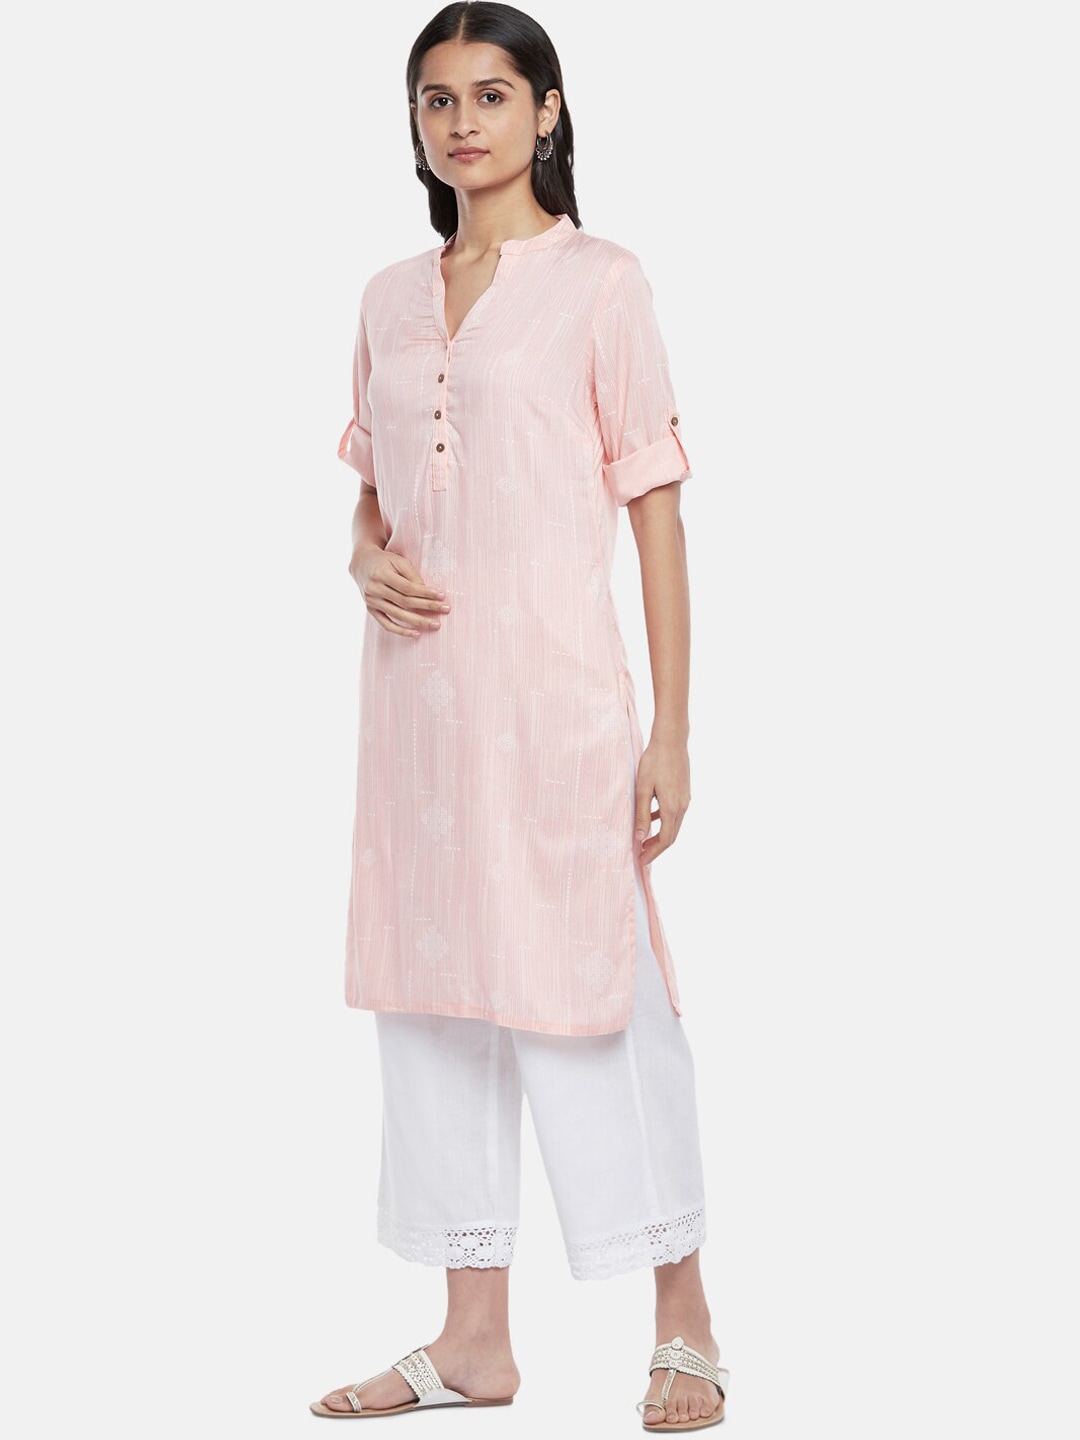 RANGMANCH BY PANTALOONS Women Pink Striped Thread Work Kurta Price in India